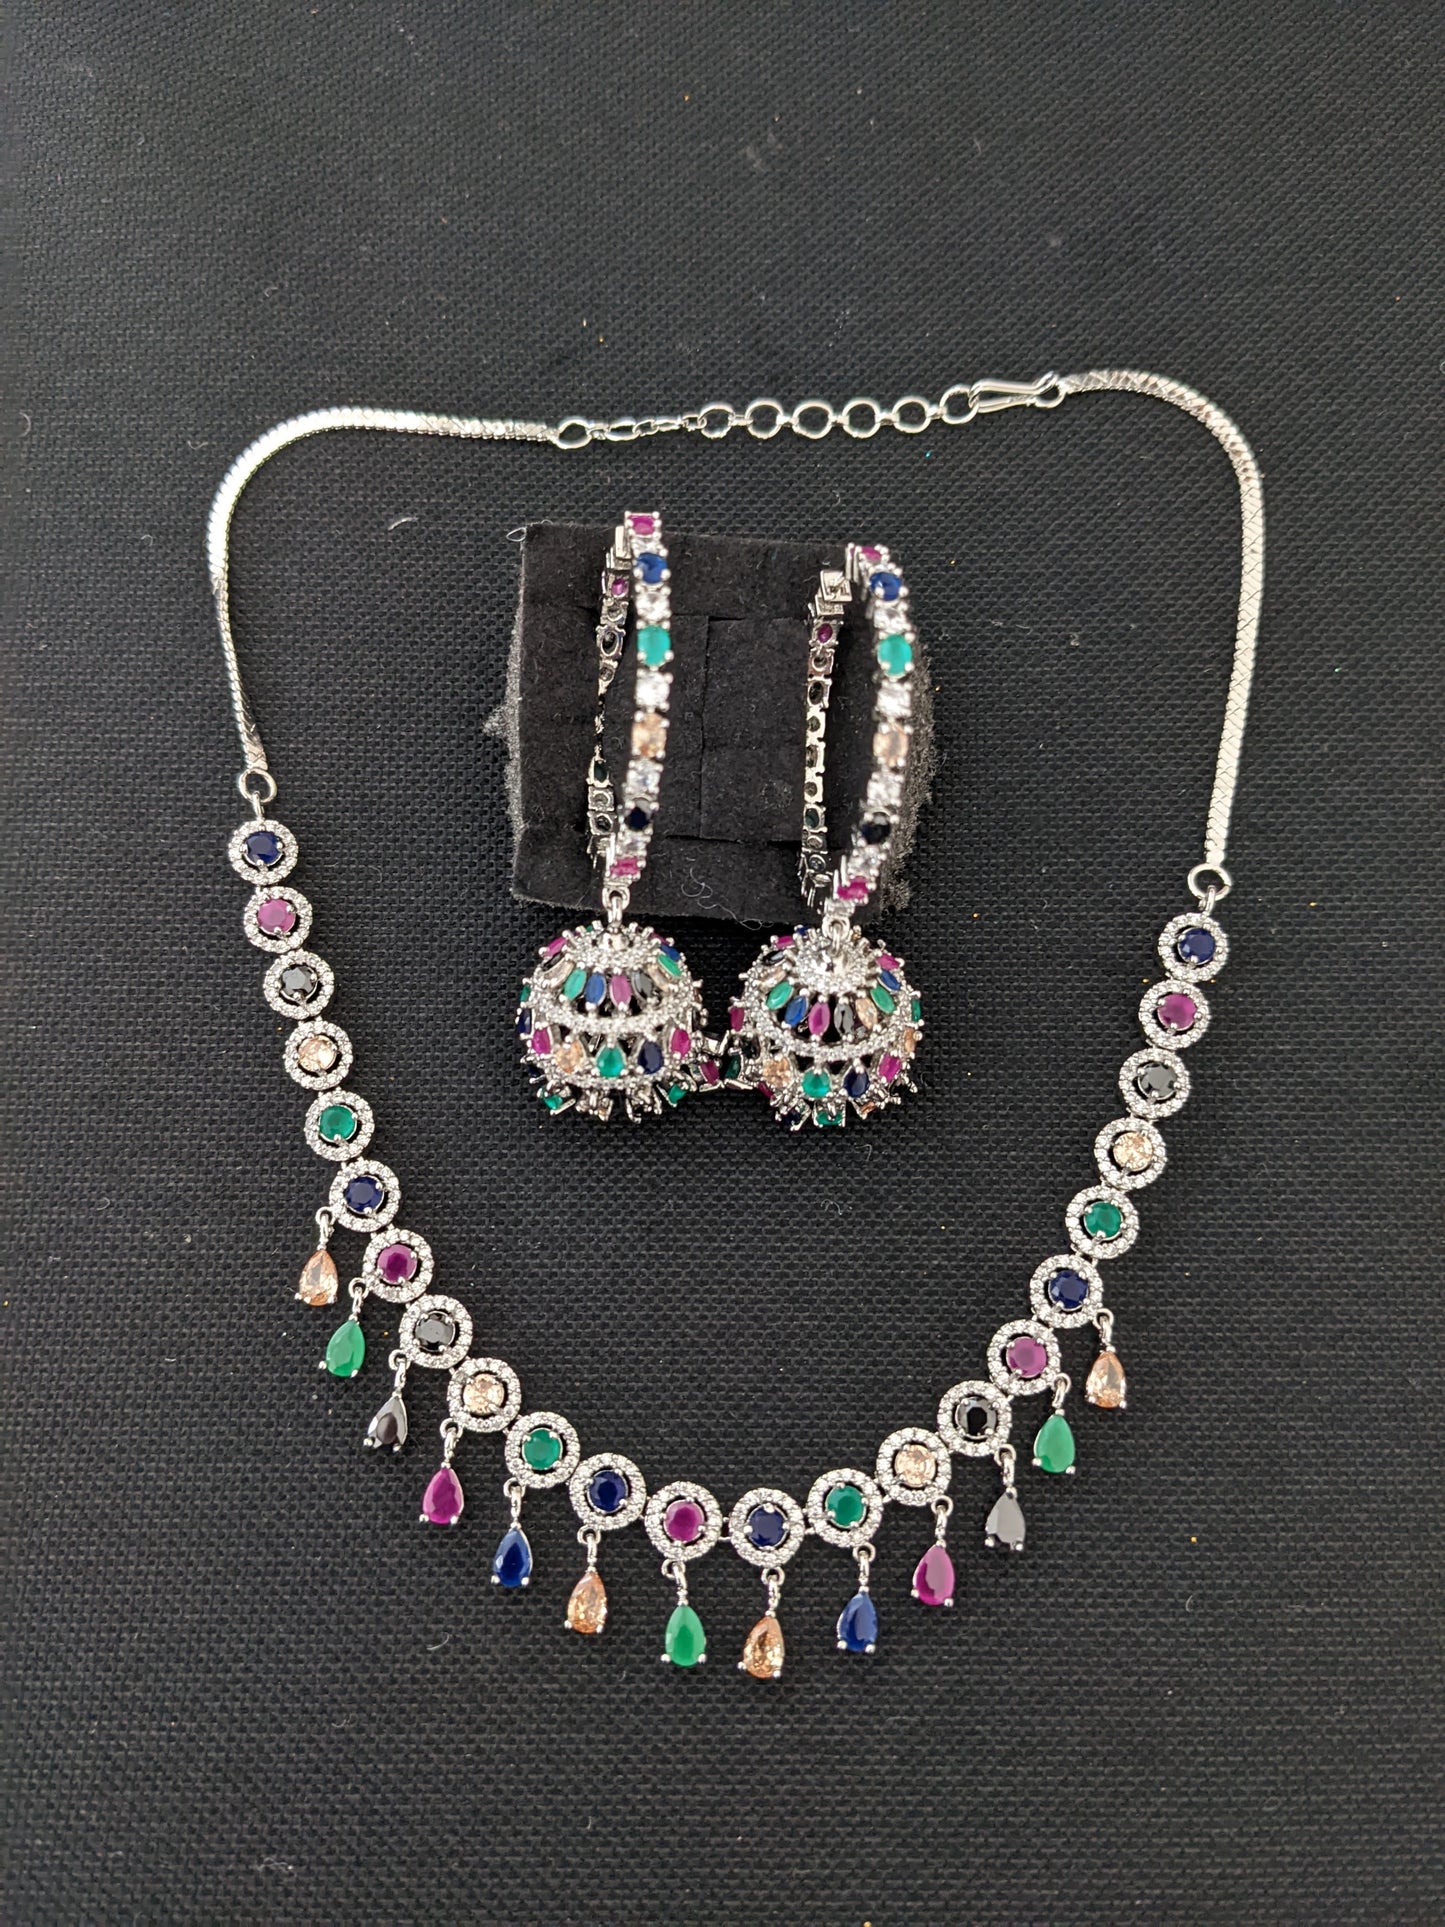 Diamond look alike Choker Necklace set - Design 1